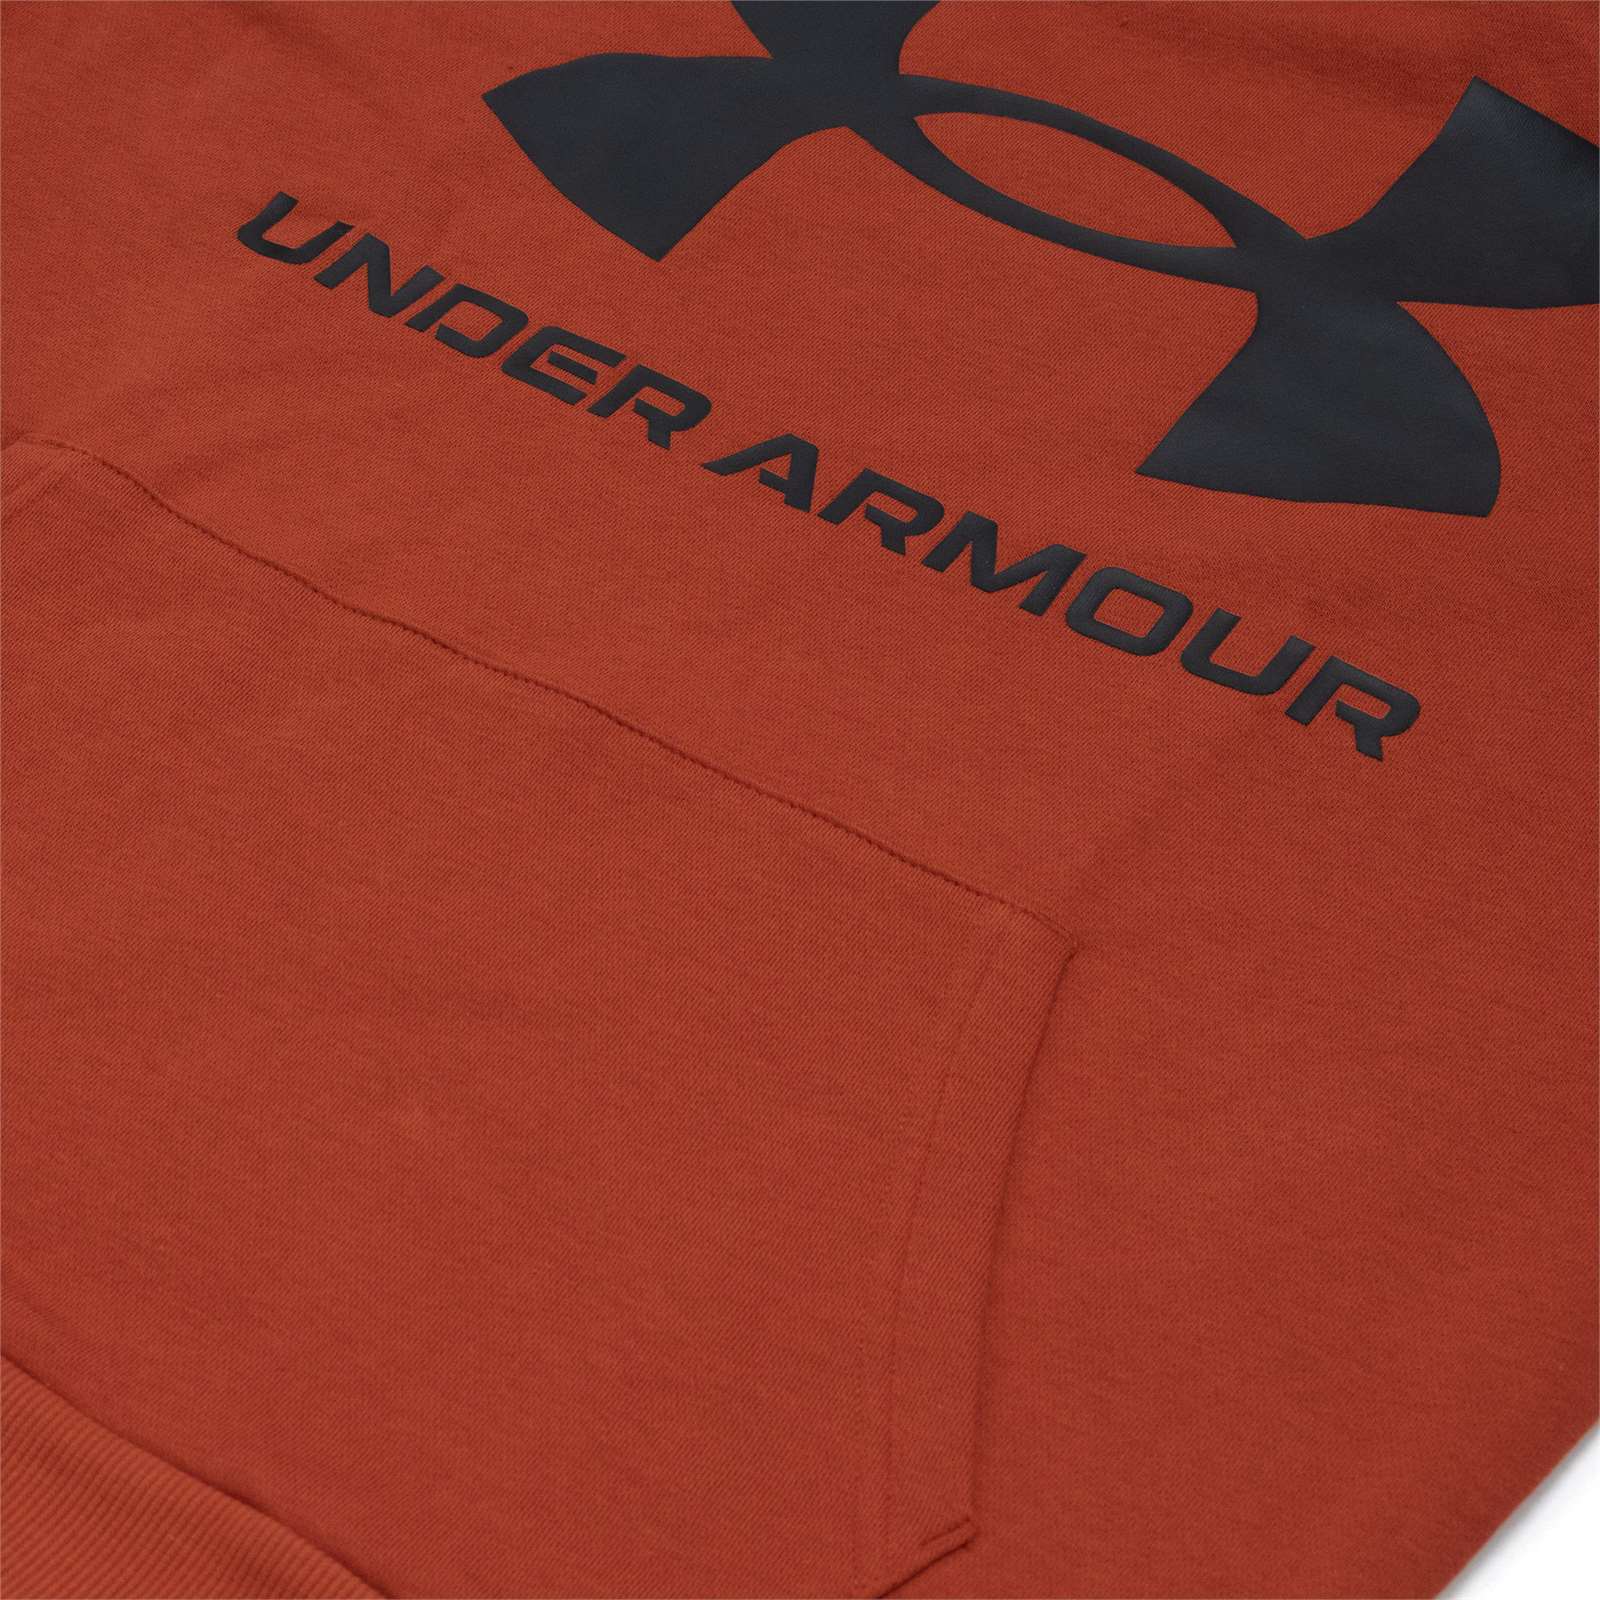 Under Armour Men Rival Fleece Big Logo Hoodie